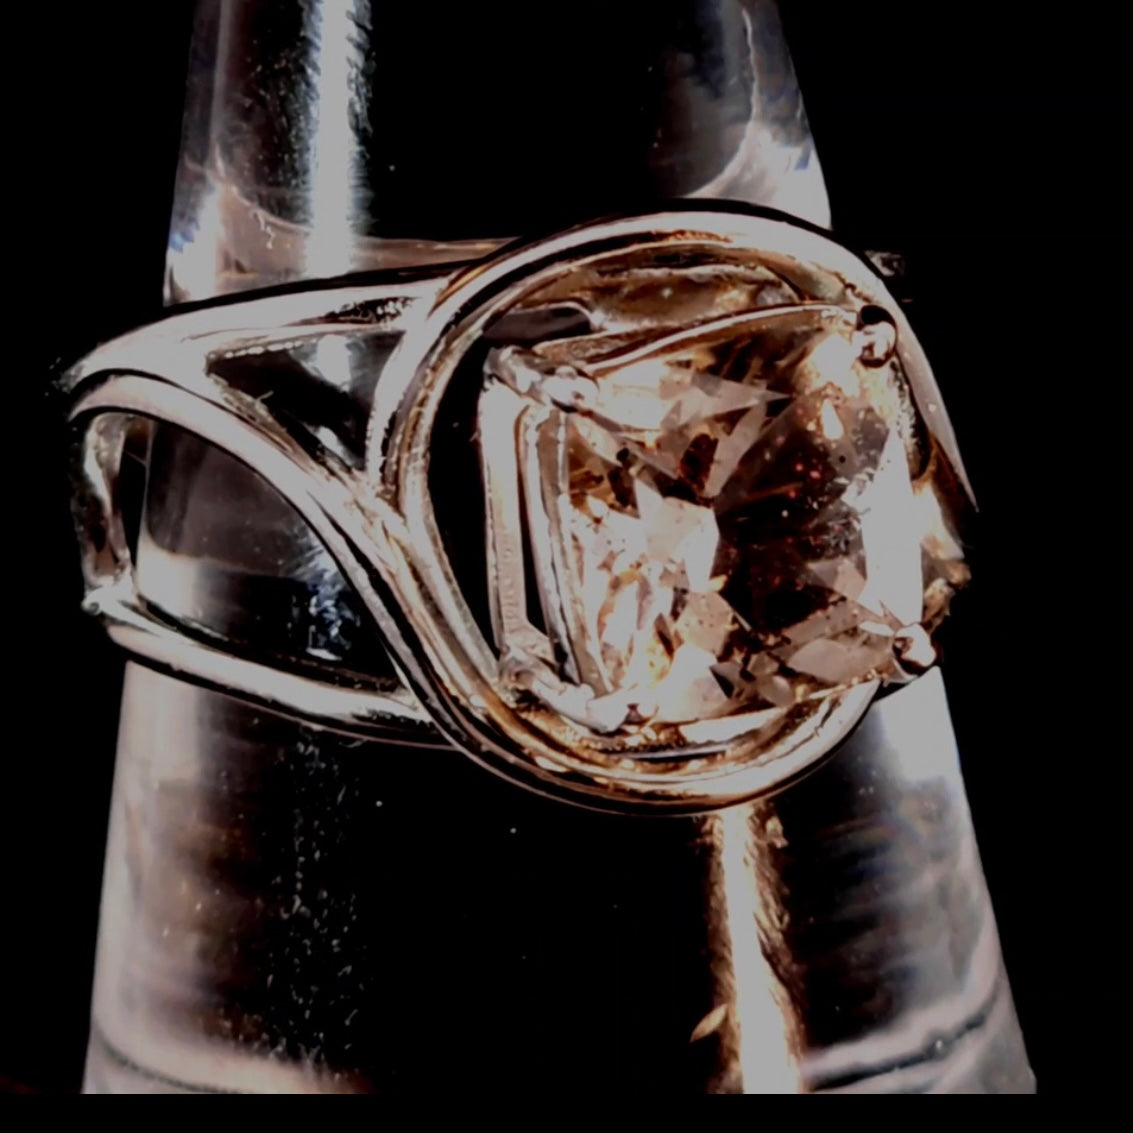 Pink Fire Covellite in Quartz Finger Cuff Adjustable Ring .925 Silver (Gem Grade) for Spiritual Evolution and Energy Flow